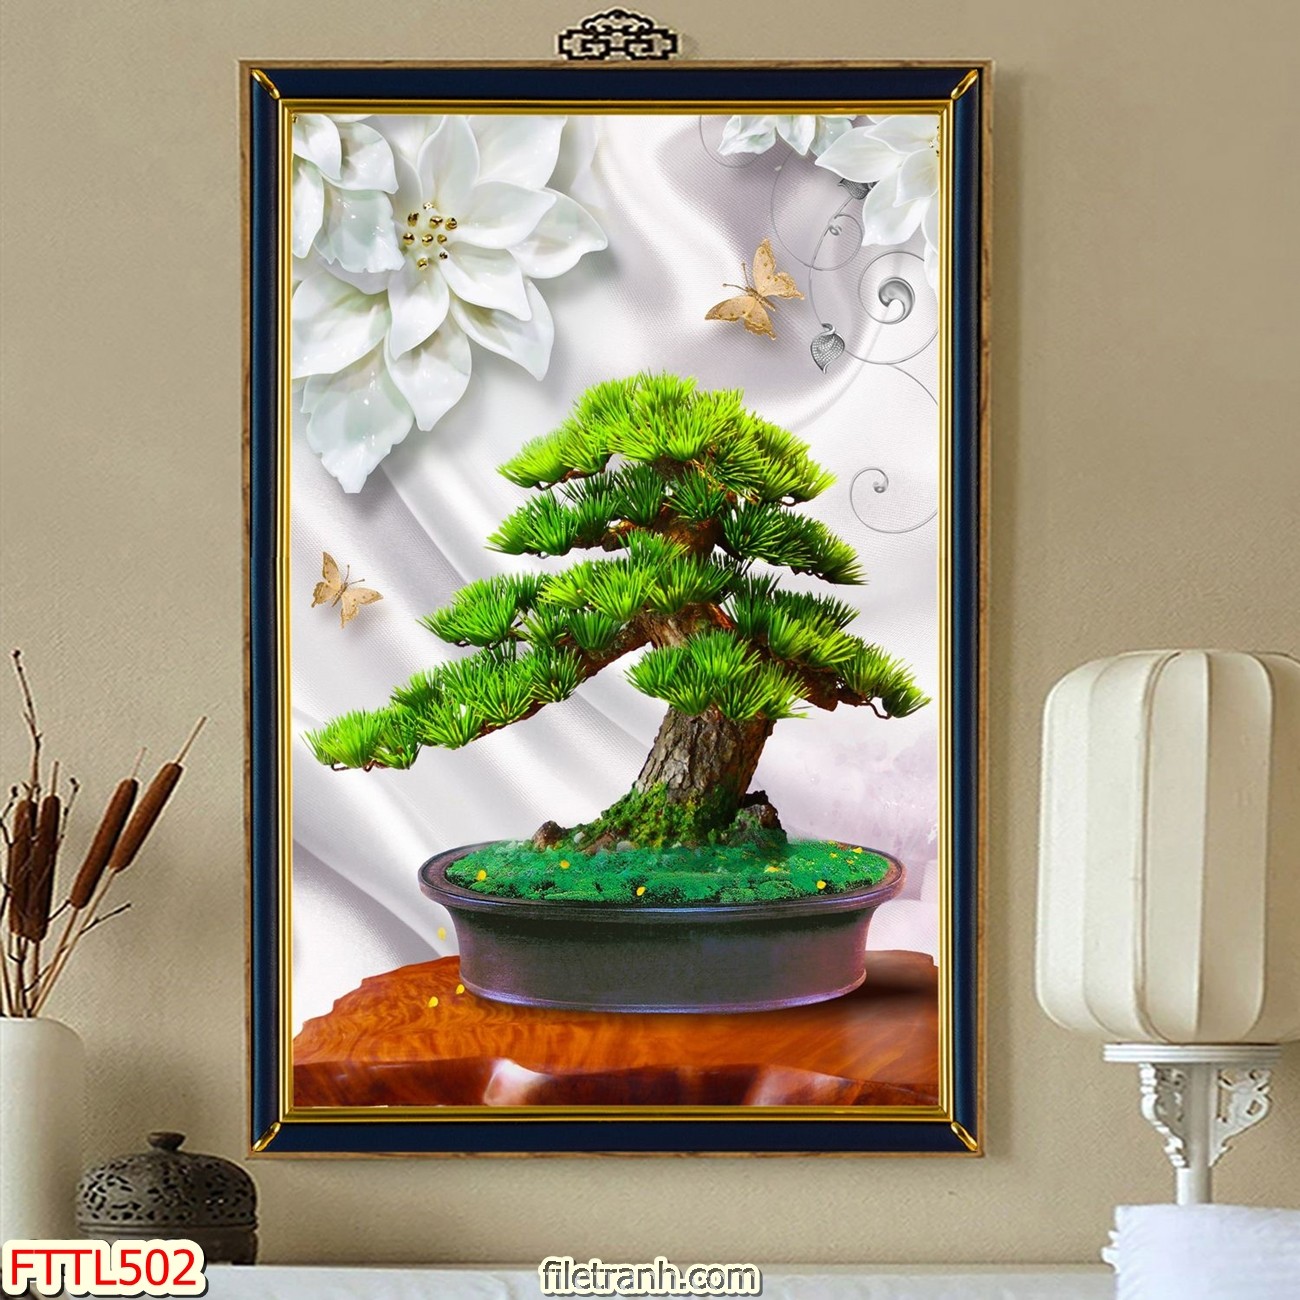 https://filetranh.com/file-tranh-chau-mai-bonsai/file-tranh-chau-mai-bonsai-fttl502.html